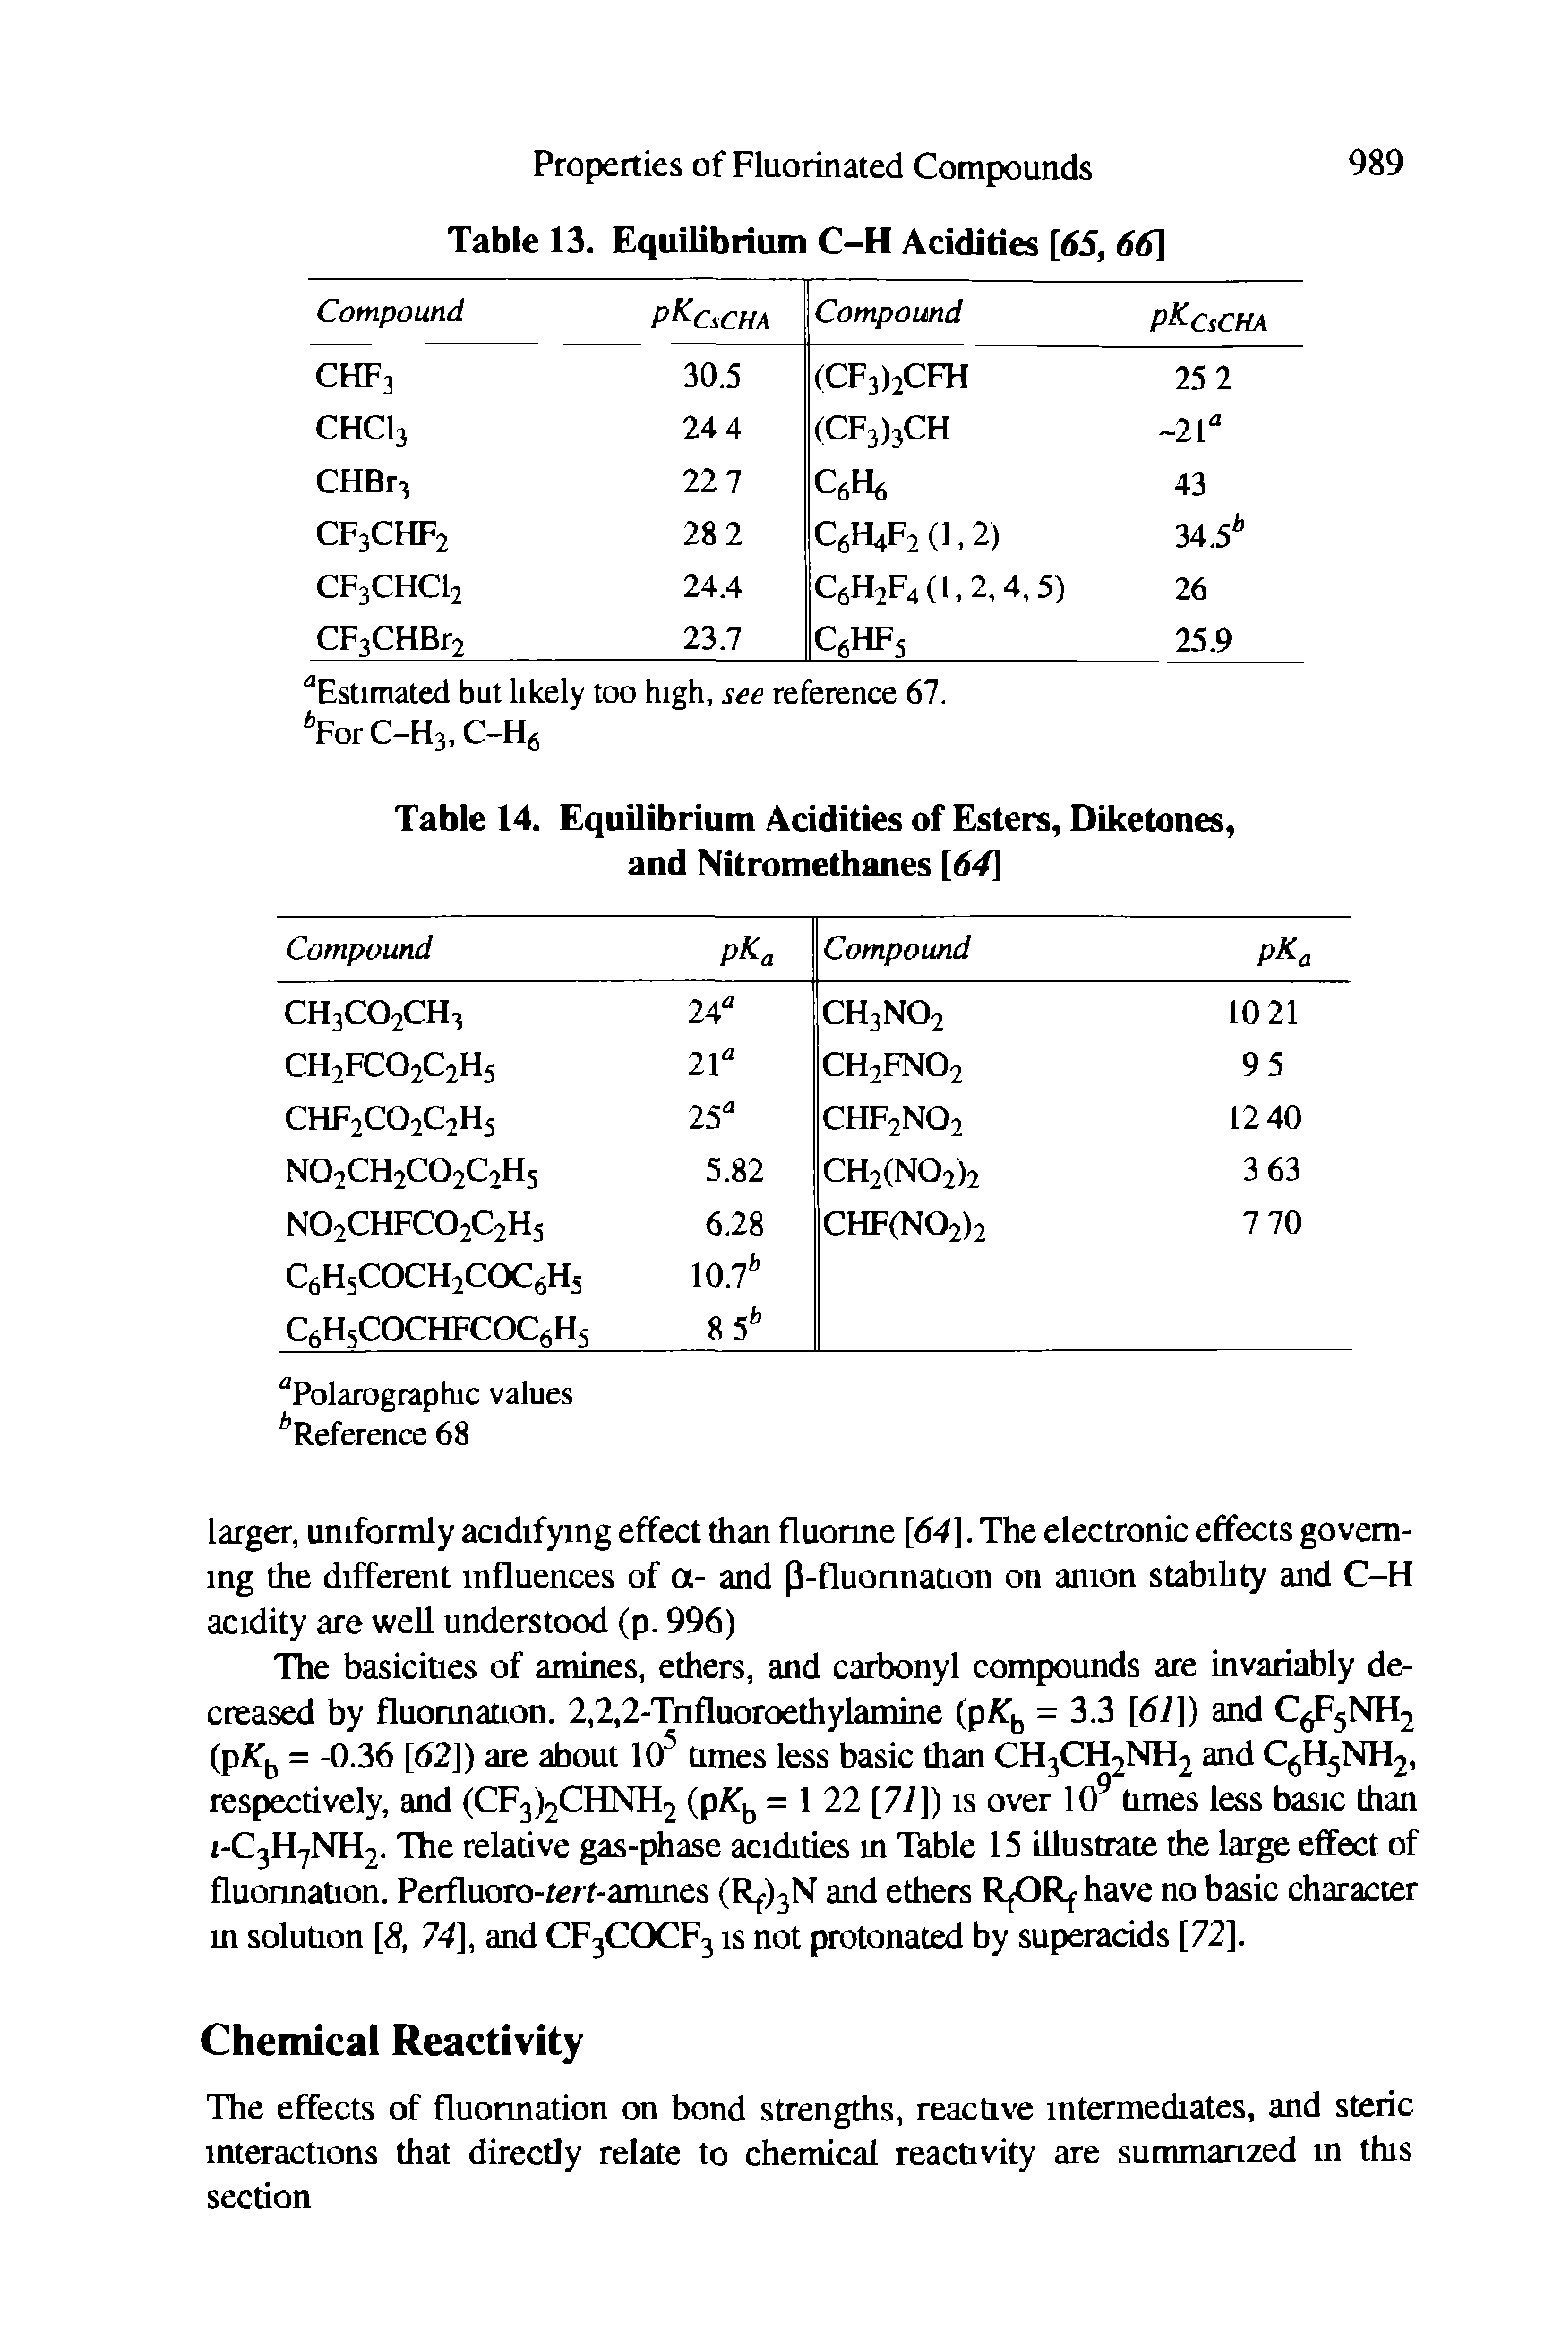 Table 14. Equilibrium Acidities of Esters, Diketones, and Nitrometbanes [64]...